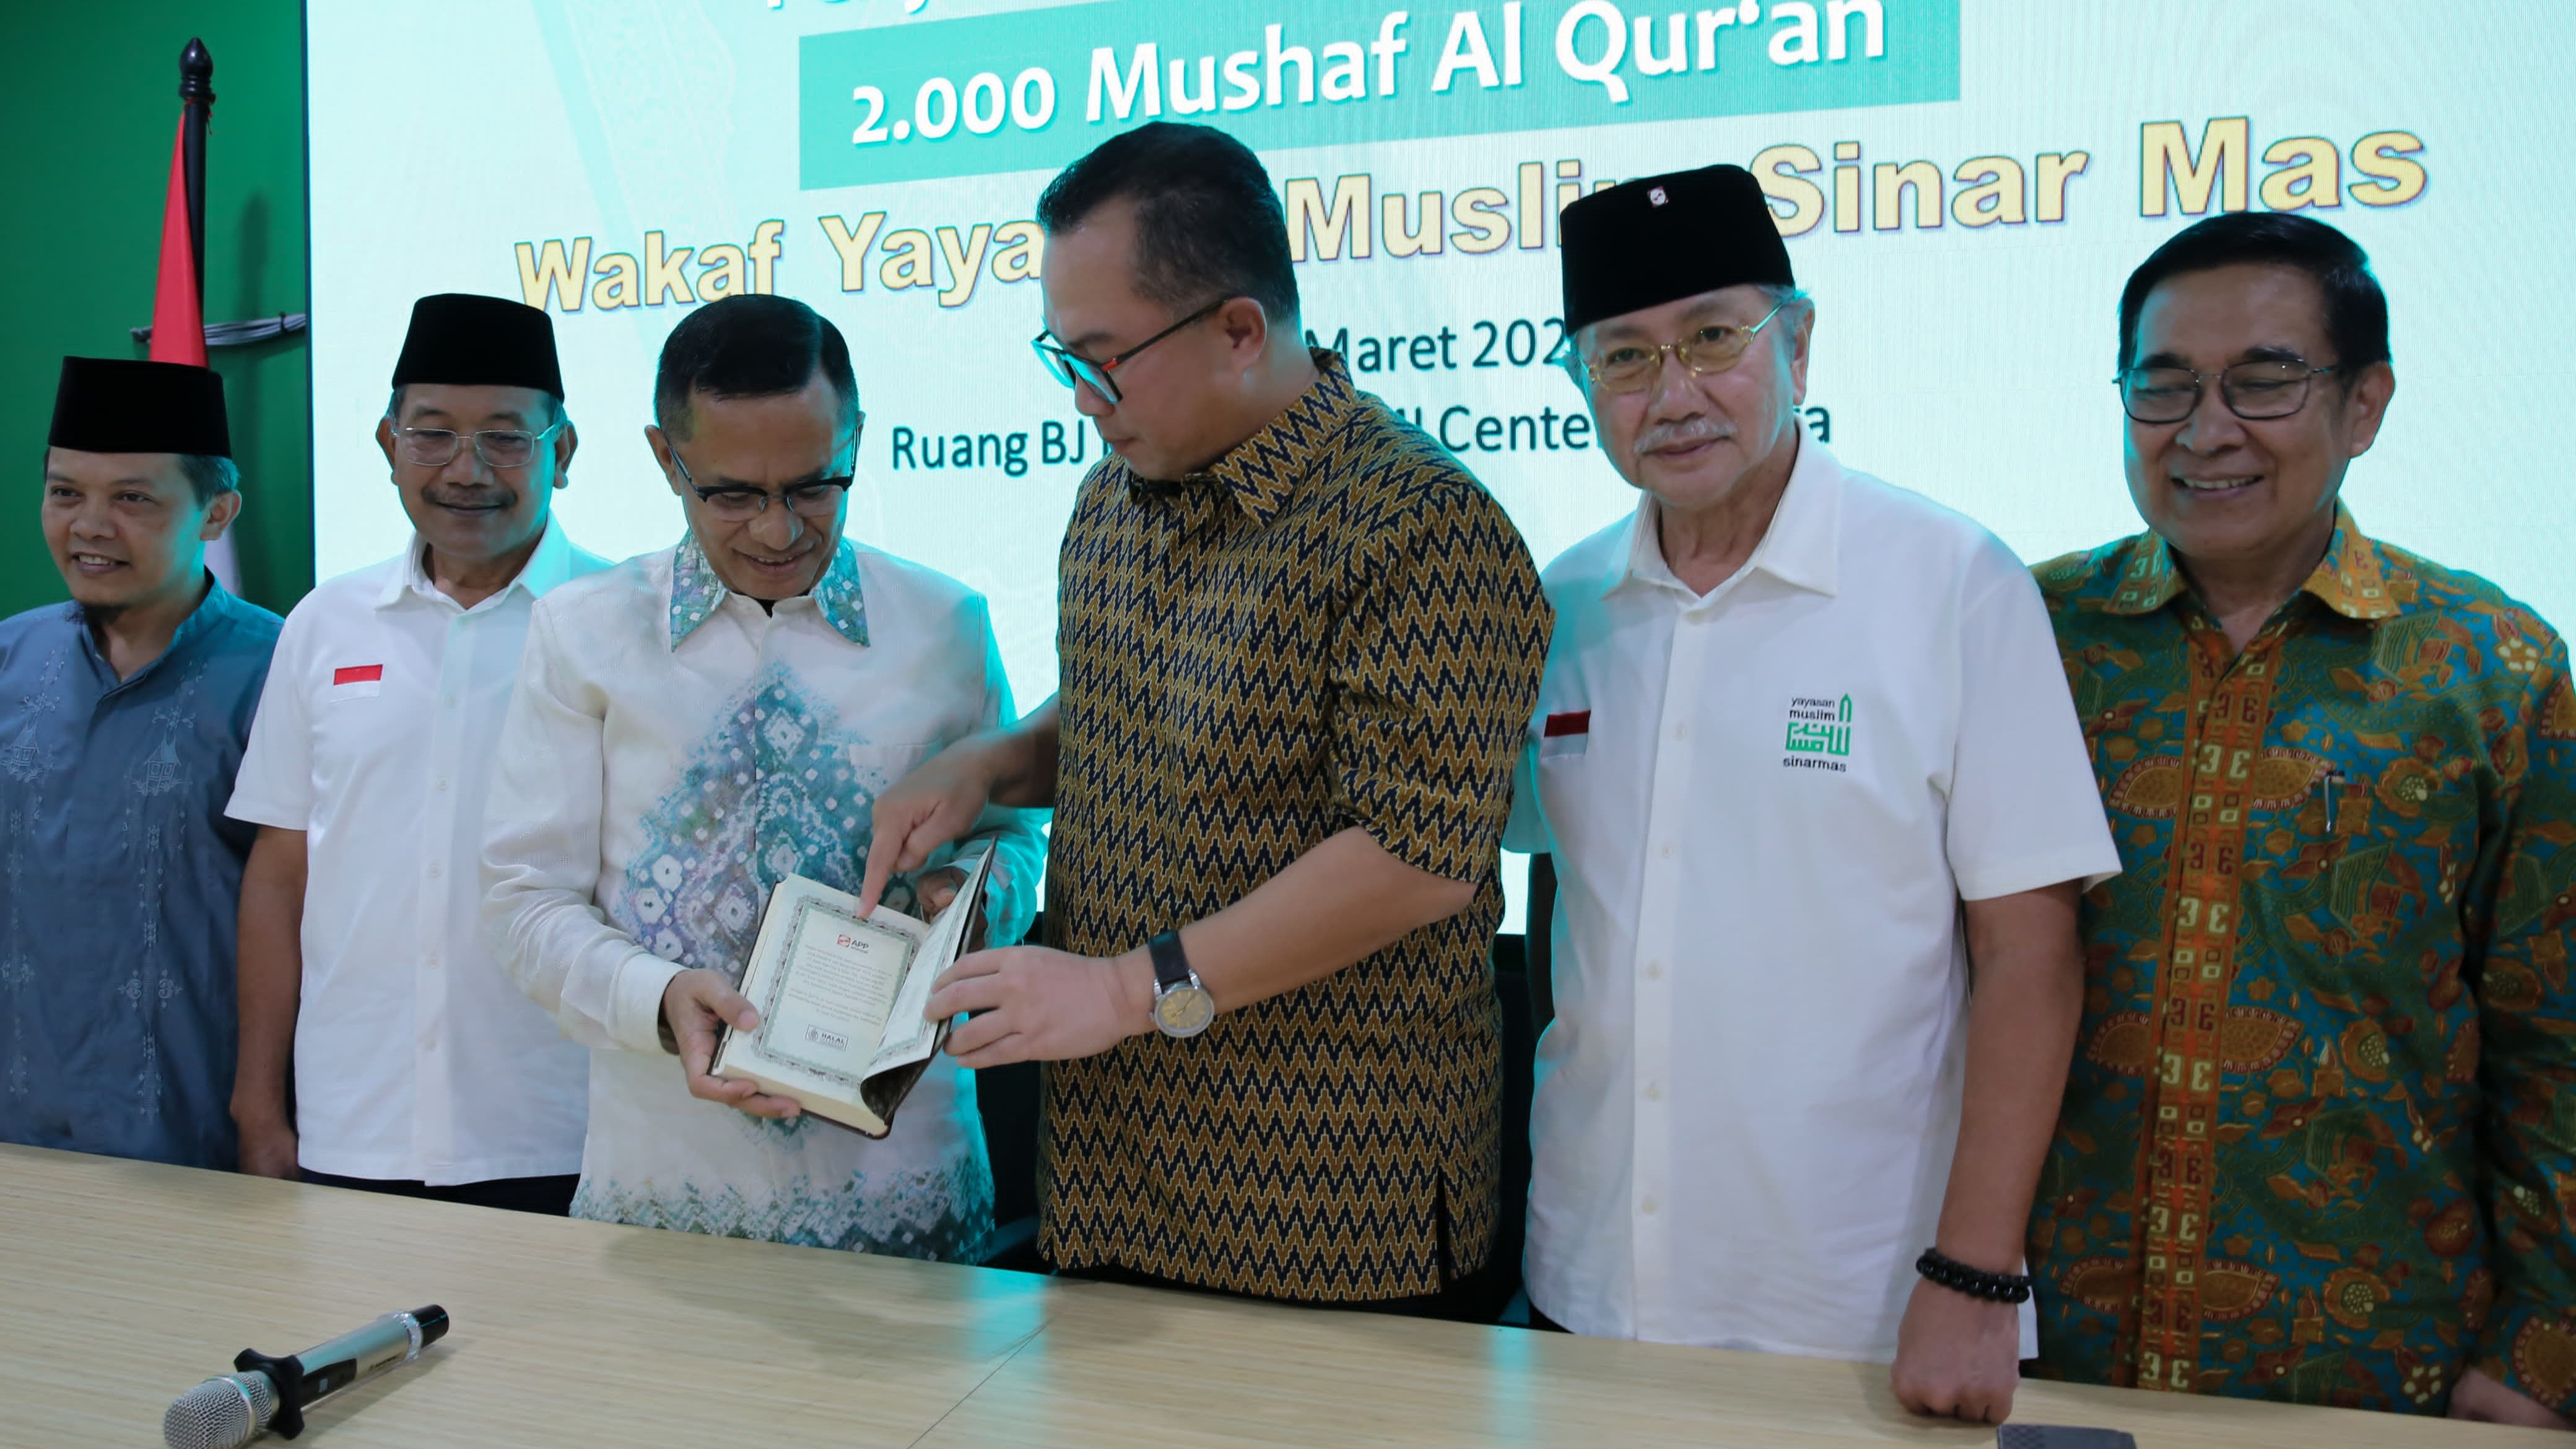 Sinar Mas mewakafkan ribuan mushaf Alquran kepada Ikatan Cendekiawan Muslim Indonesia (ICMI).